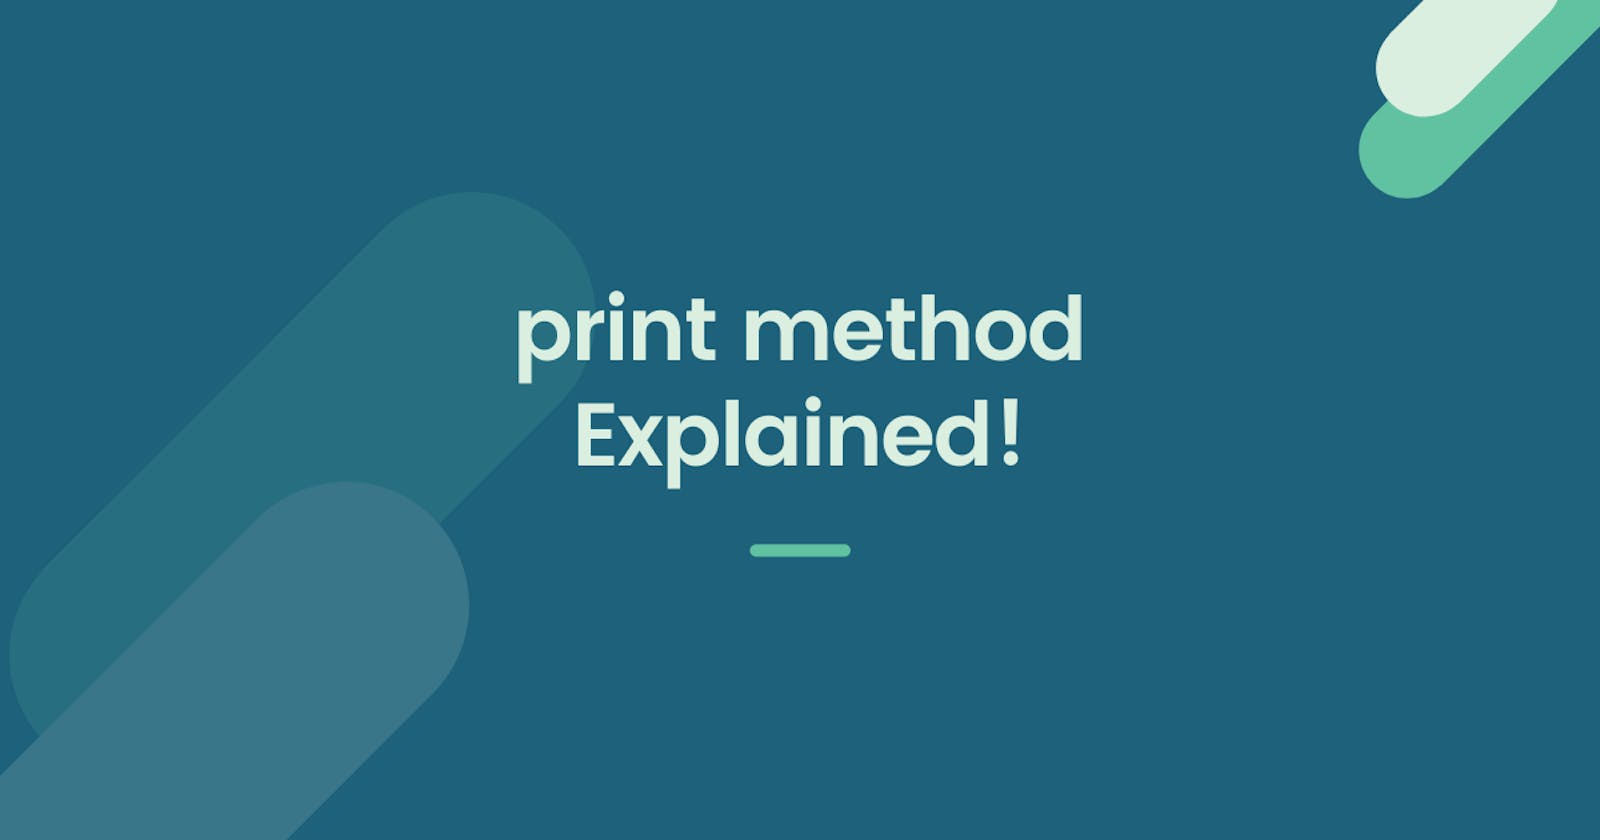 The print method in Python